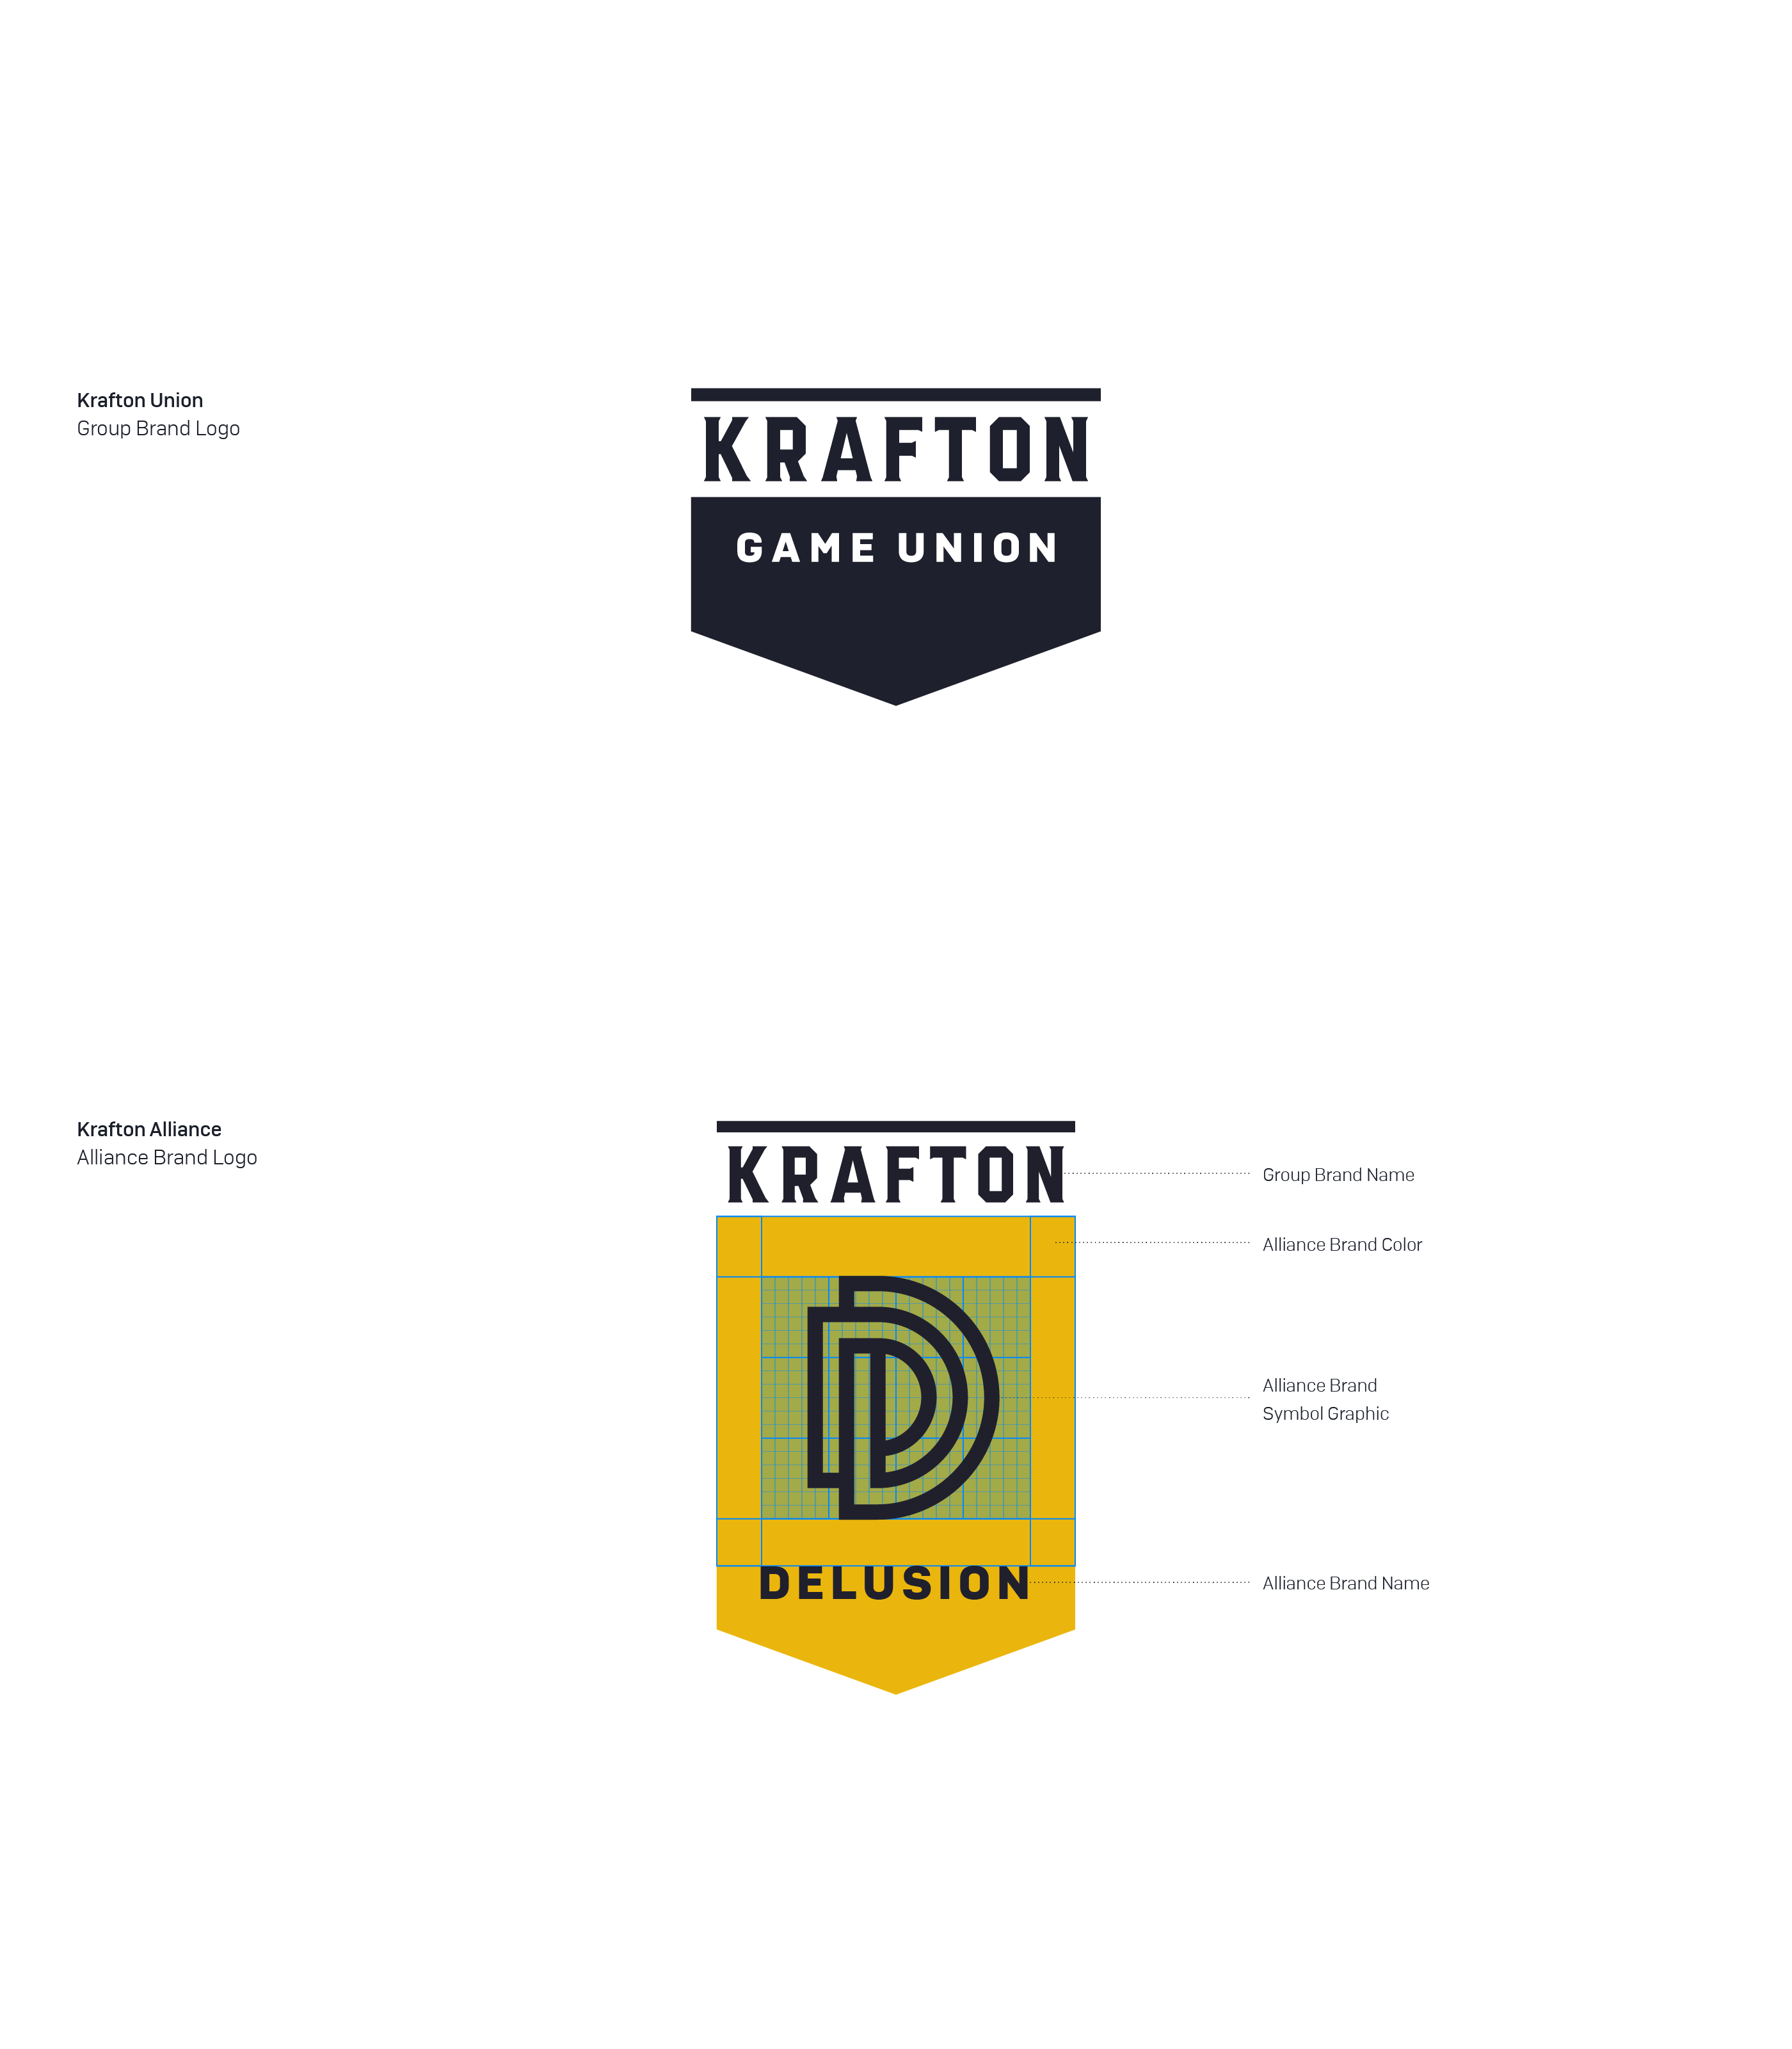 Krafton game union Brand eXperience Design renewal4e90af88492253.5dd79cfb78c53.png